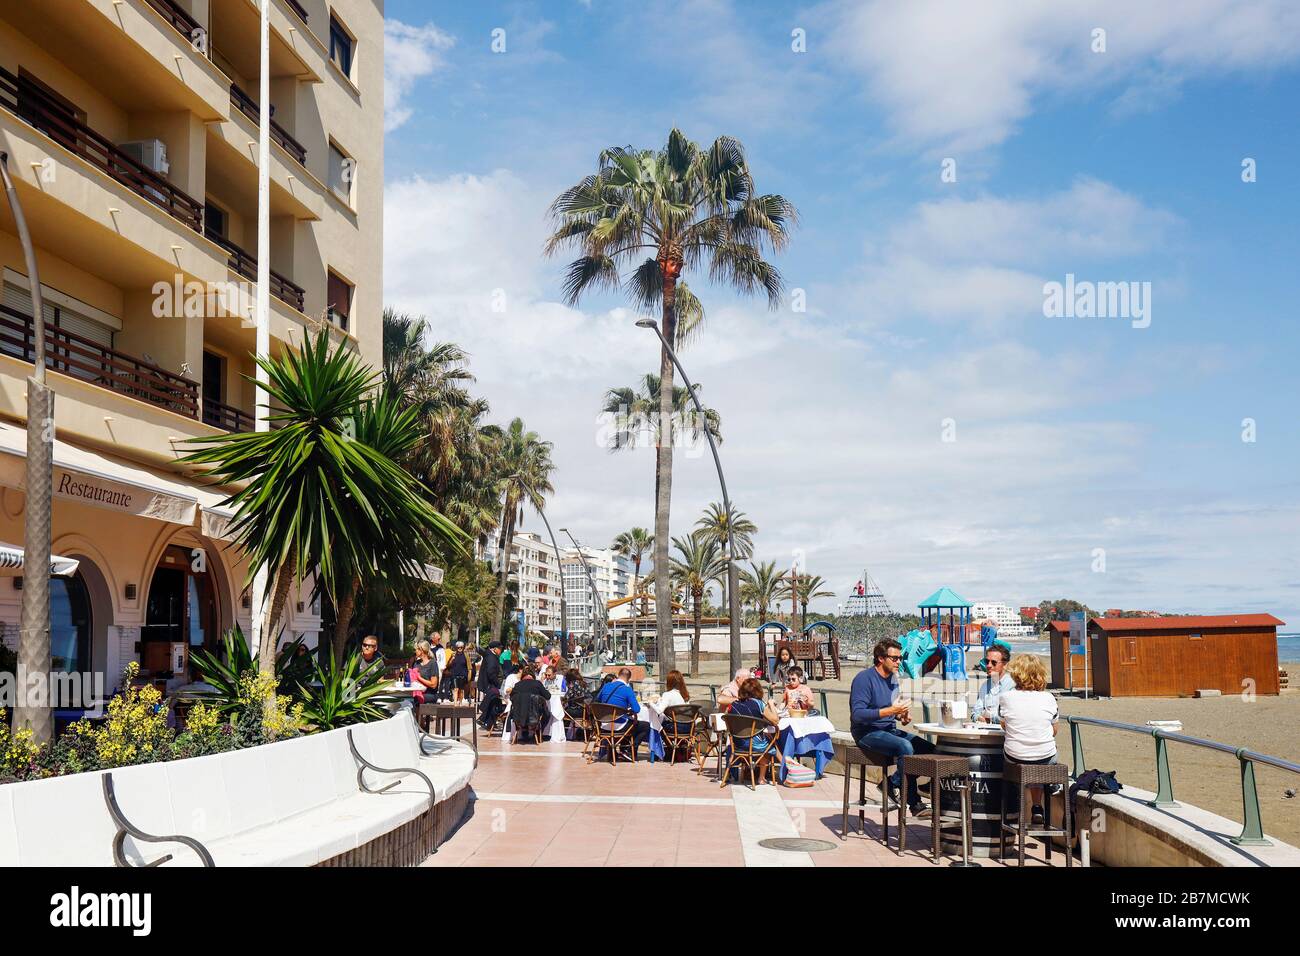 Dining on the paseo maritimo, the seaside promenade, Estepona, Costa del Sol, Malaga Province, Andalusia, southern Spain. Stock Photo